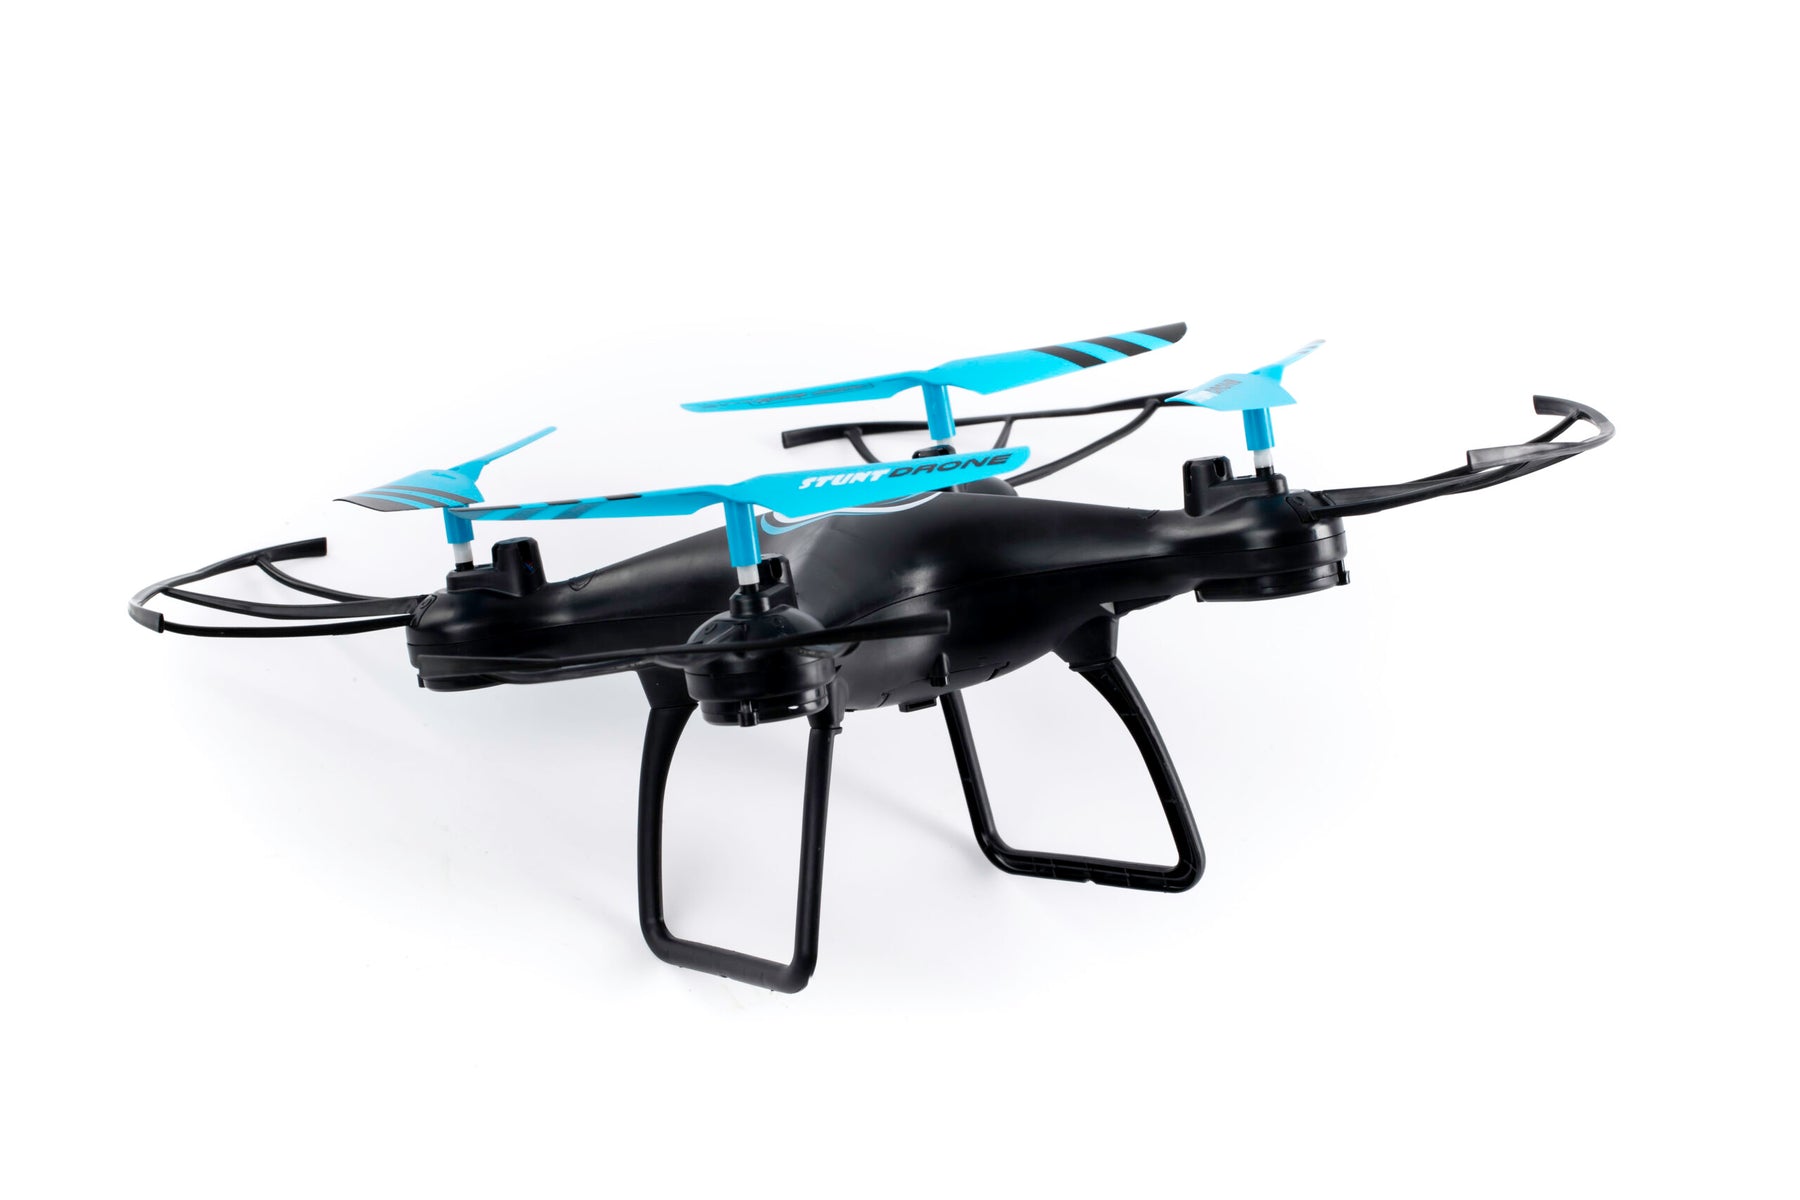 Silverlit Flybotic Stunt Drone